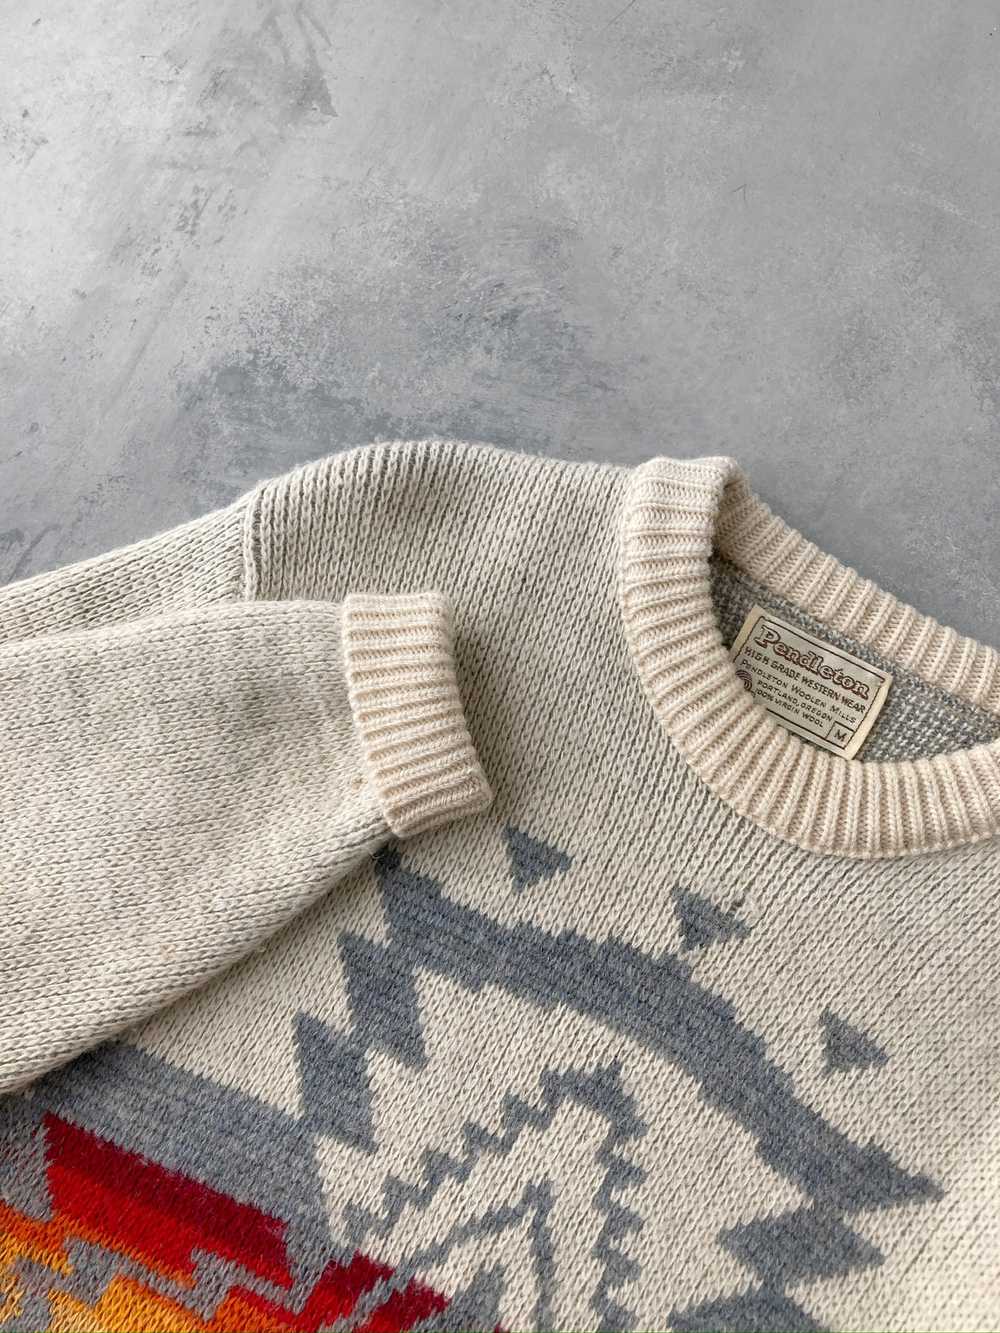 Pendleton Sweater 70's - Small - image 2